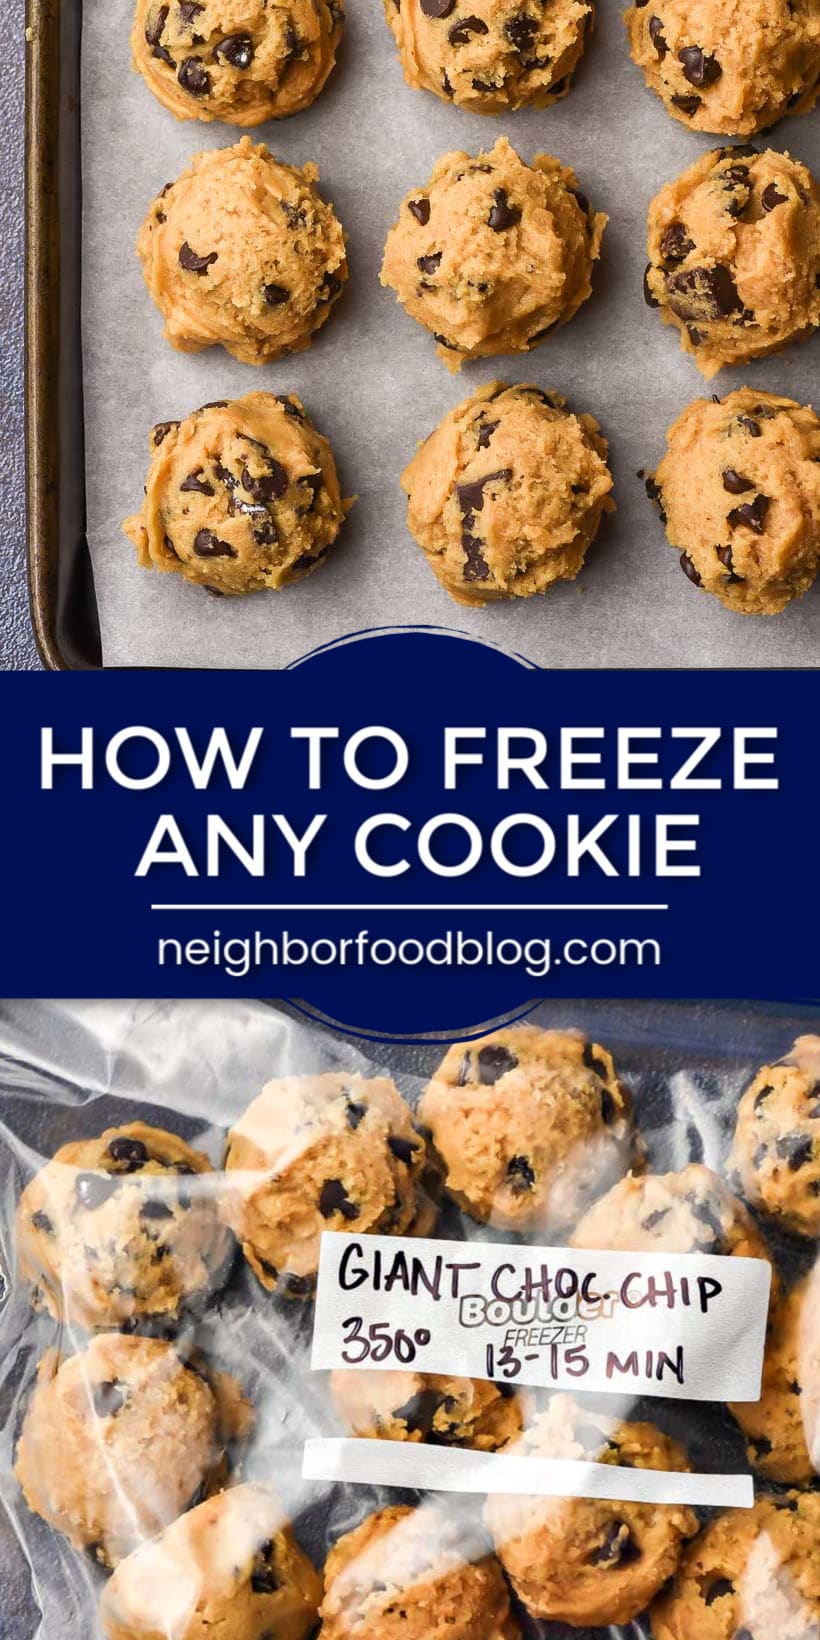 https://neighborfoodblog.com/wp-content/uploads/2019/12/how-to-freeze-cookies.jpg